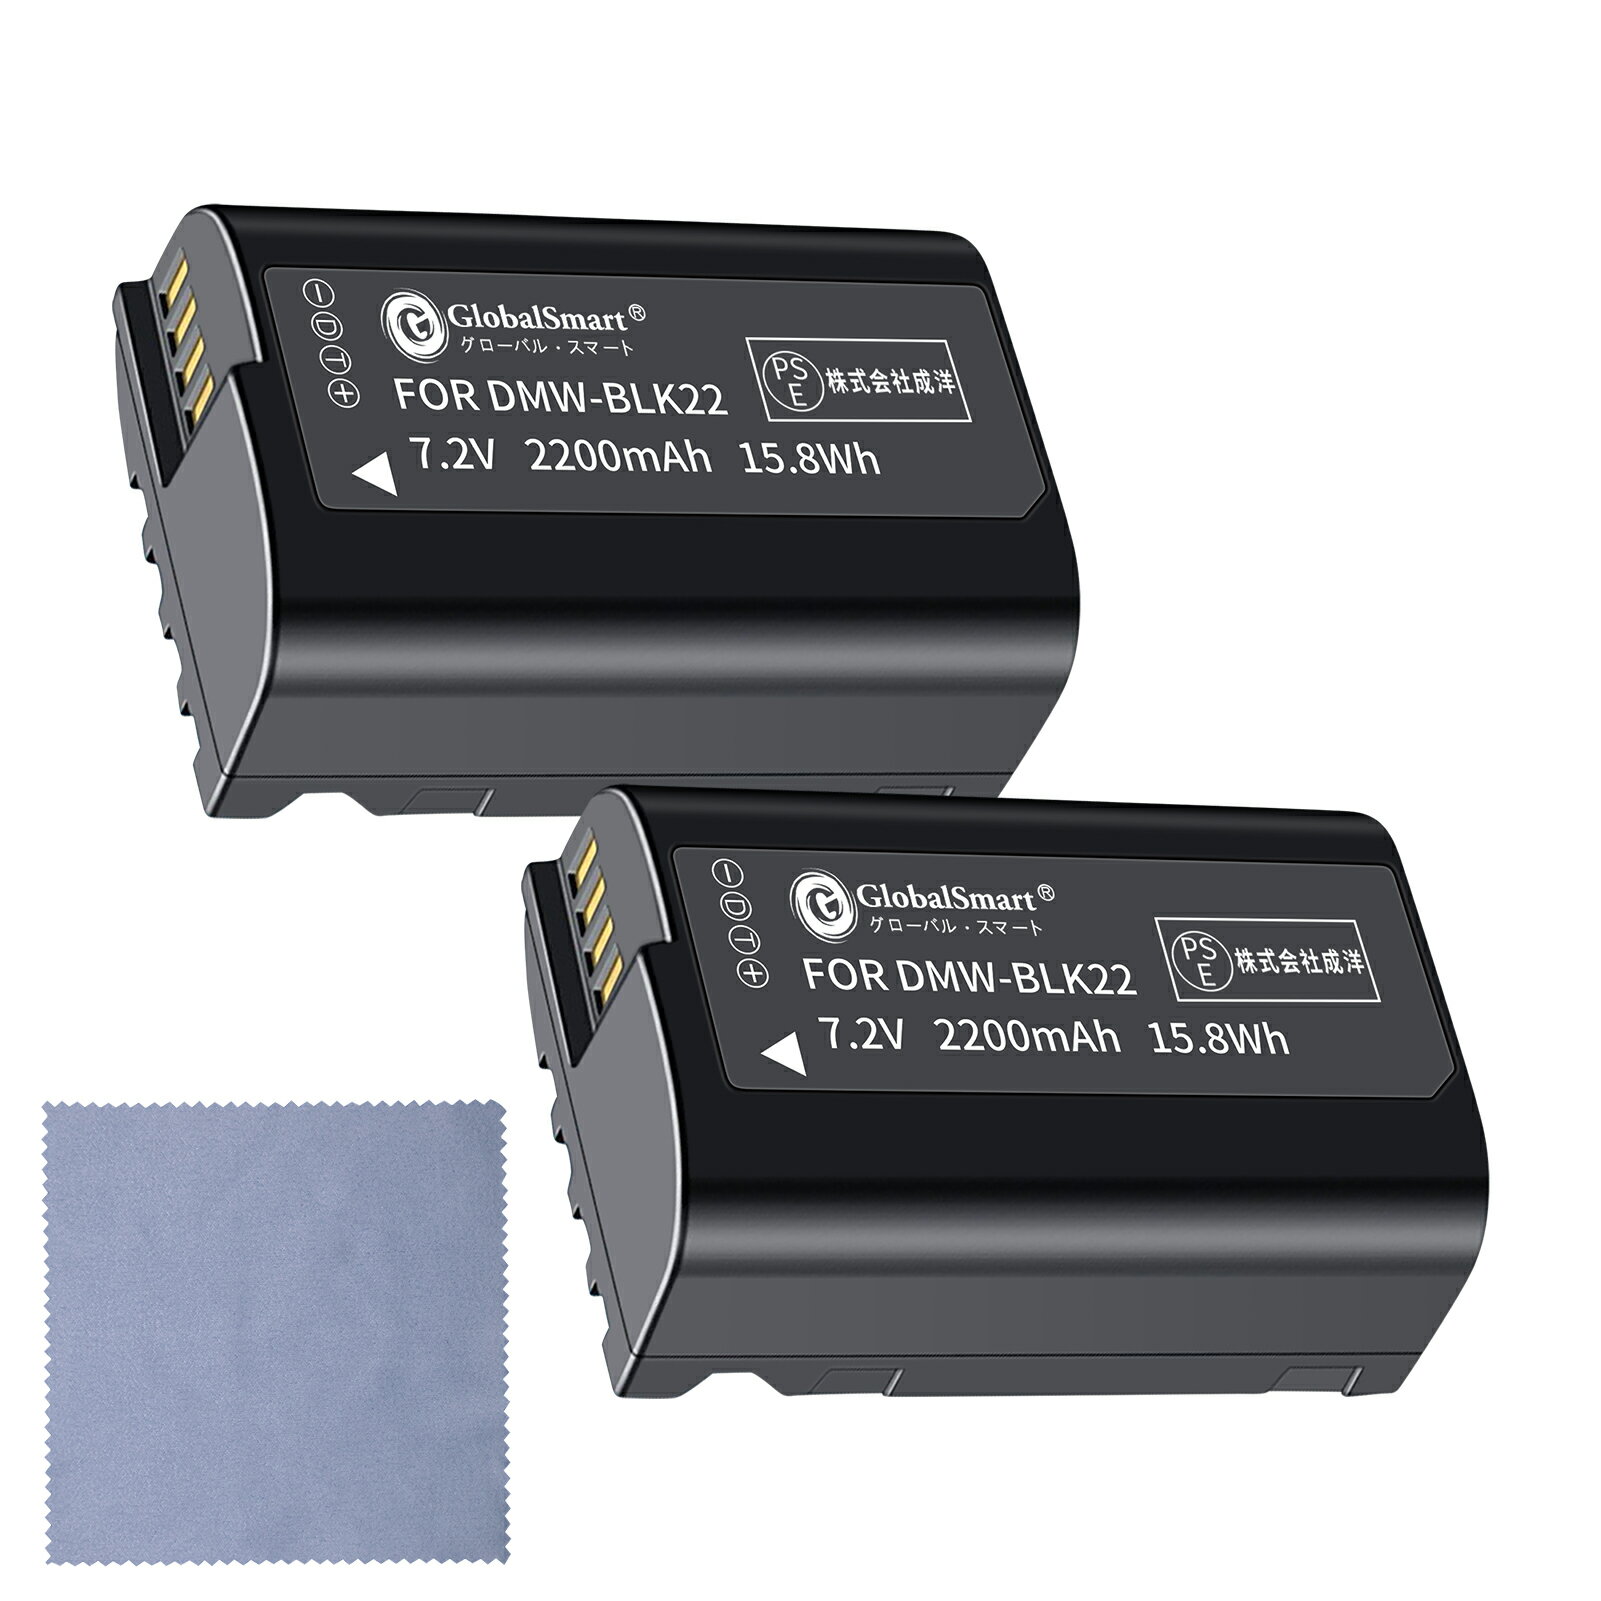 Globalsmart 新品 FUJIFILM DC-GH5 カメラ互換 WLF バッテリー  互換対応機種カメラ 交換可能バッテリーバッテリー 充電池 高品質セル搭載 予備バッテリー